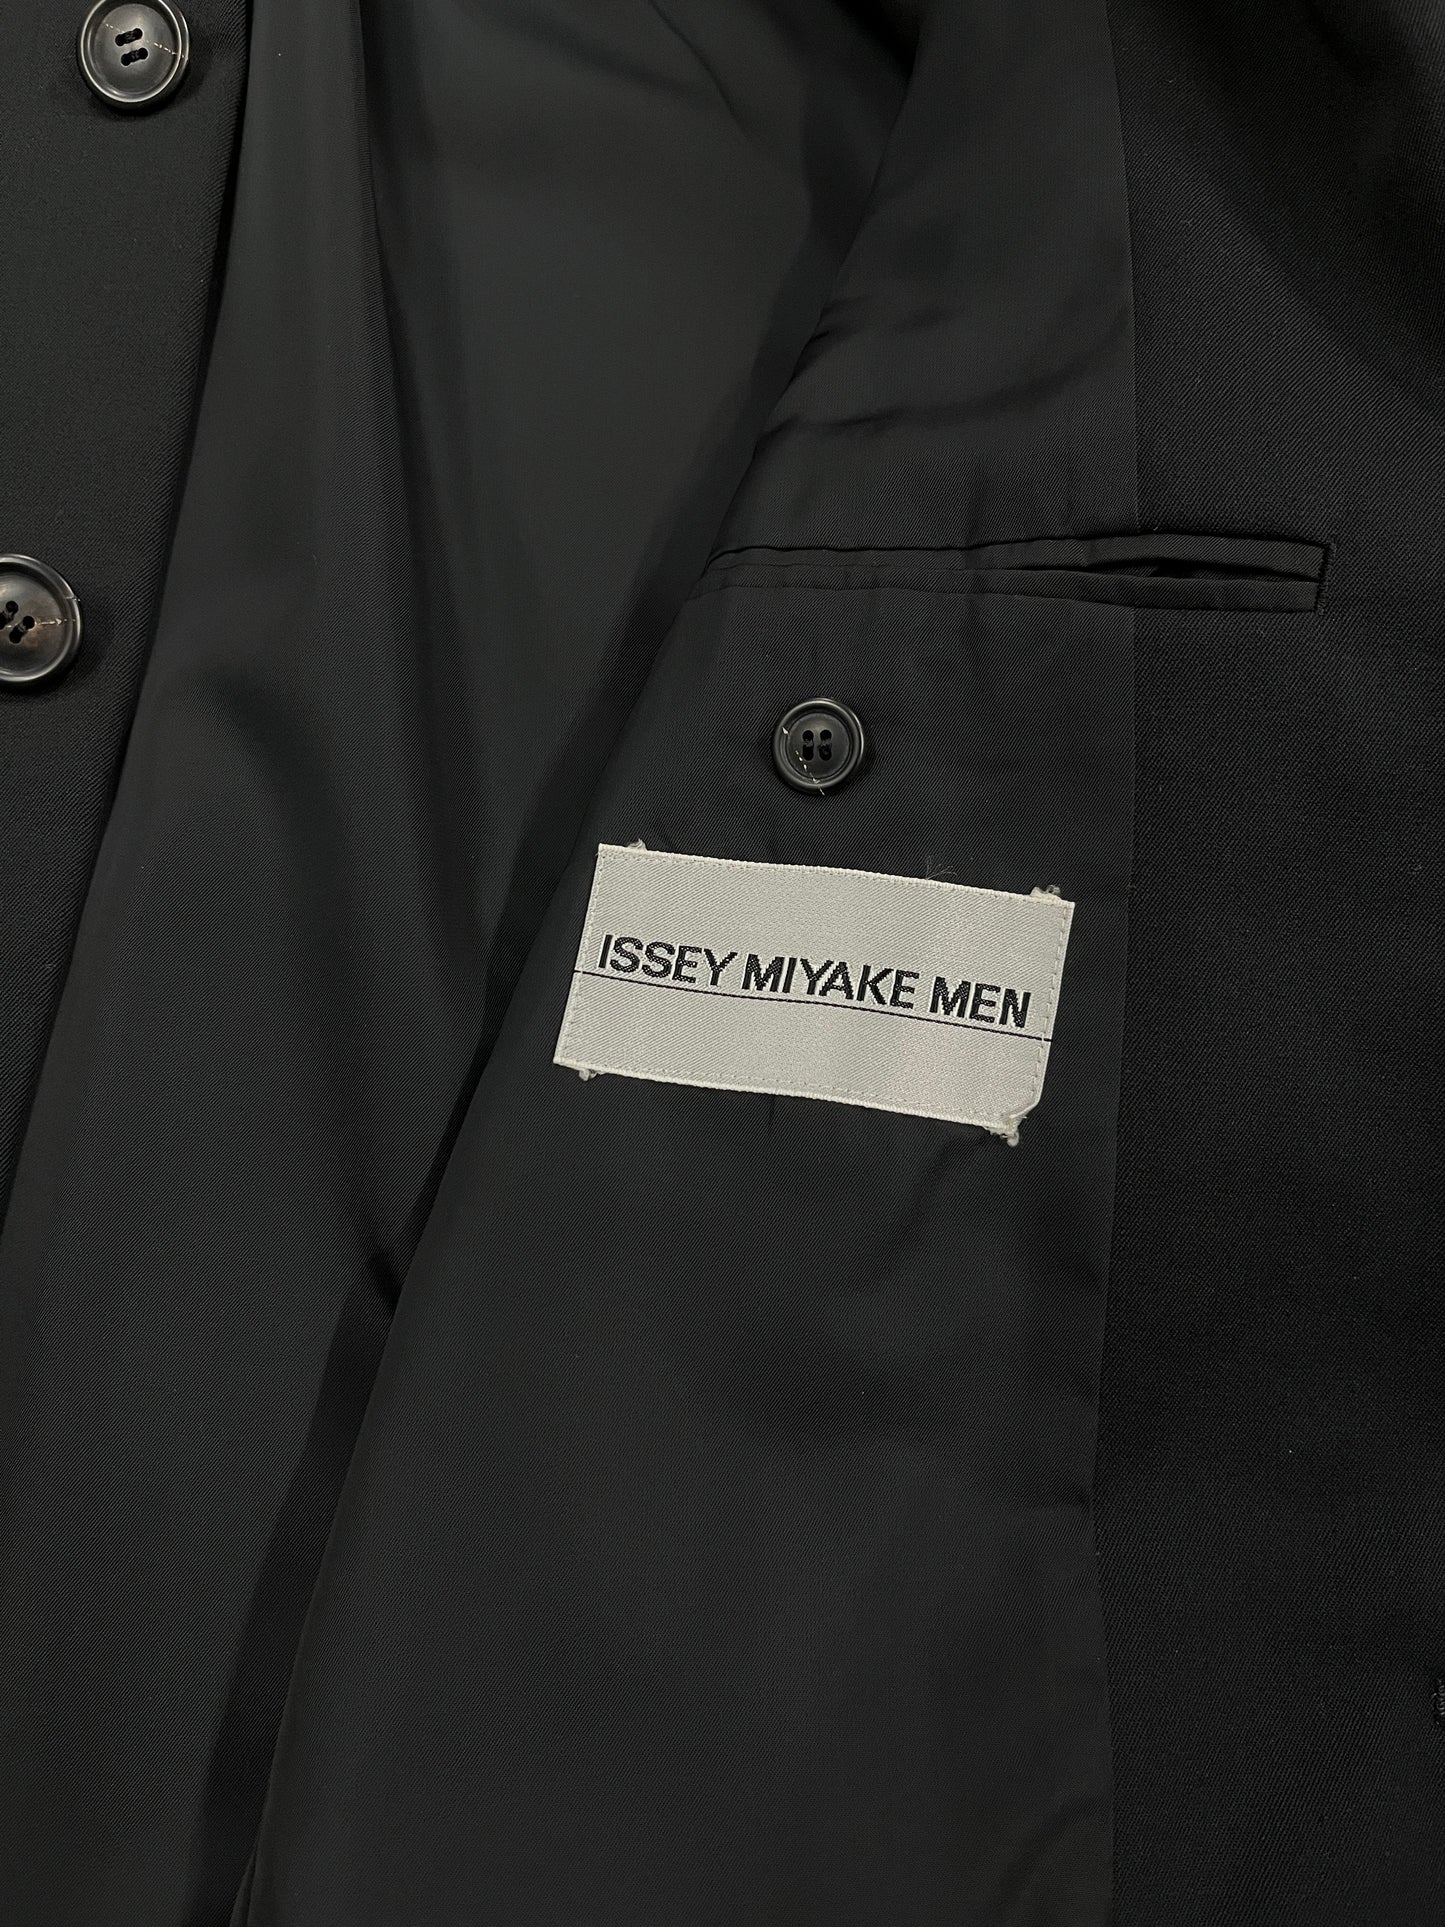 Issey Miyake Men 2000s Stand Collar Jacket - Size M